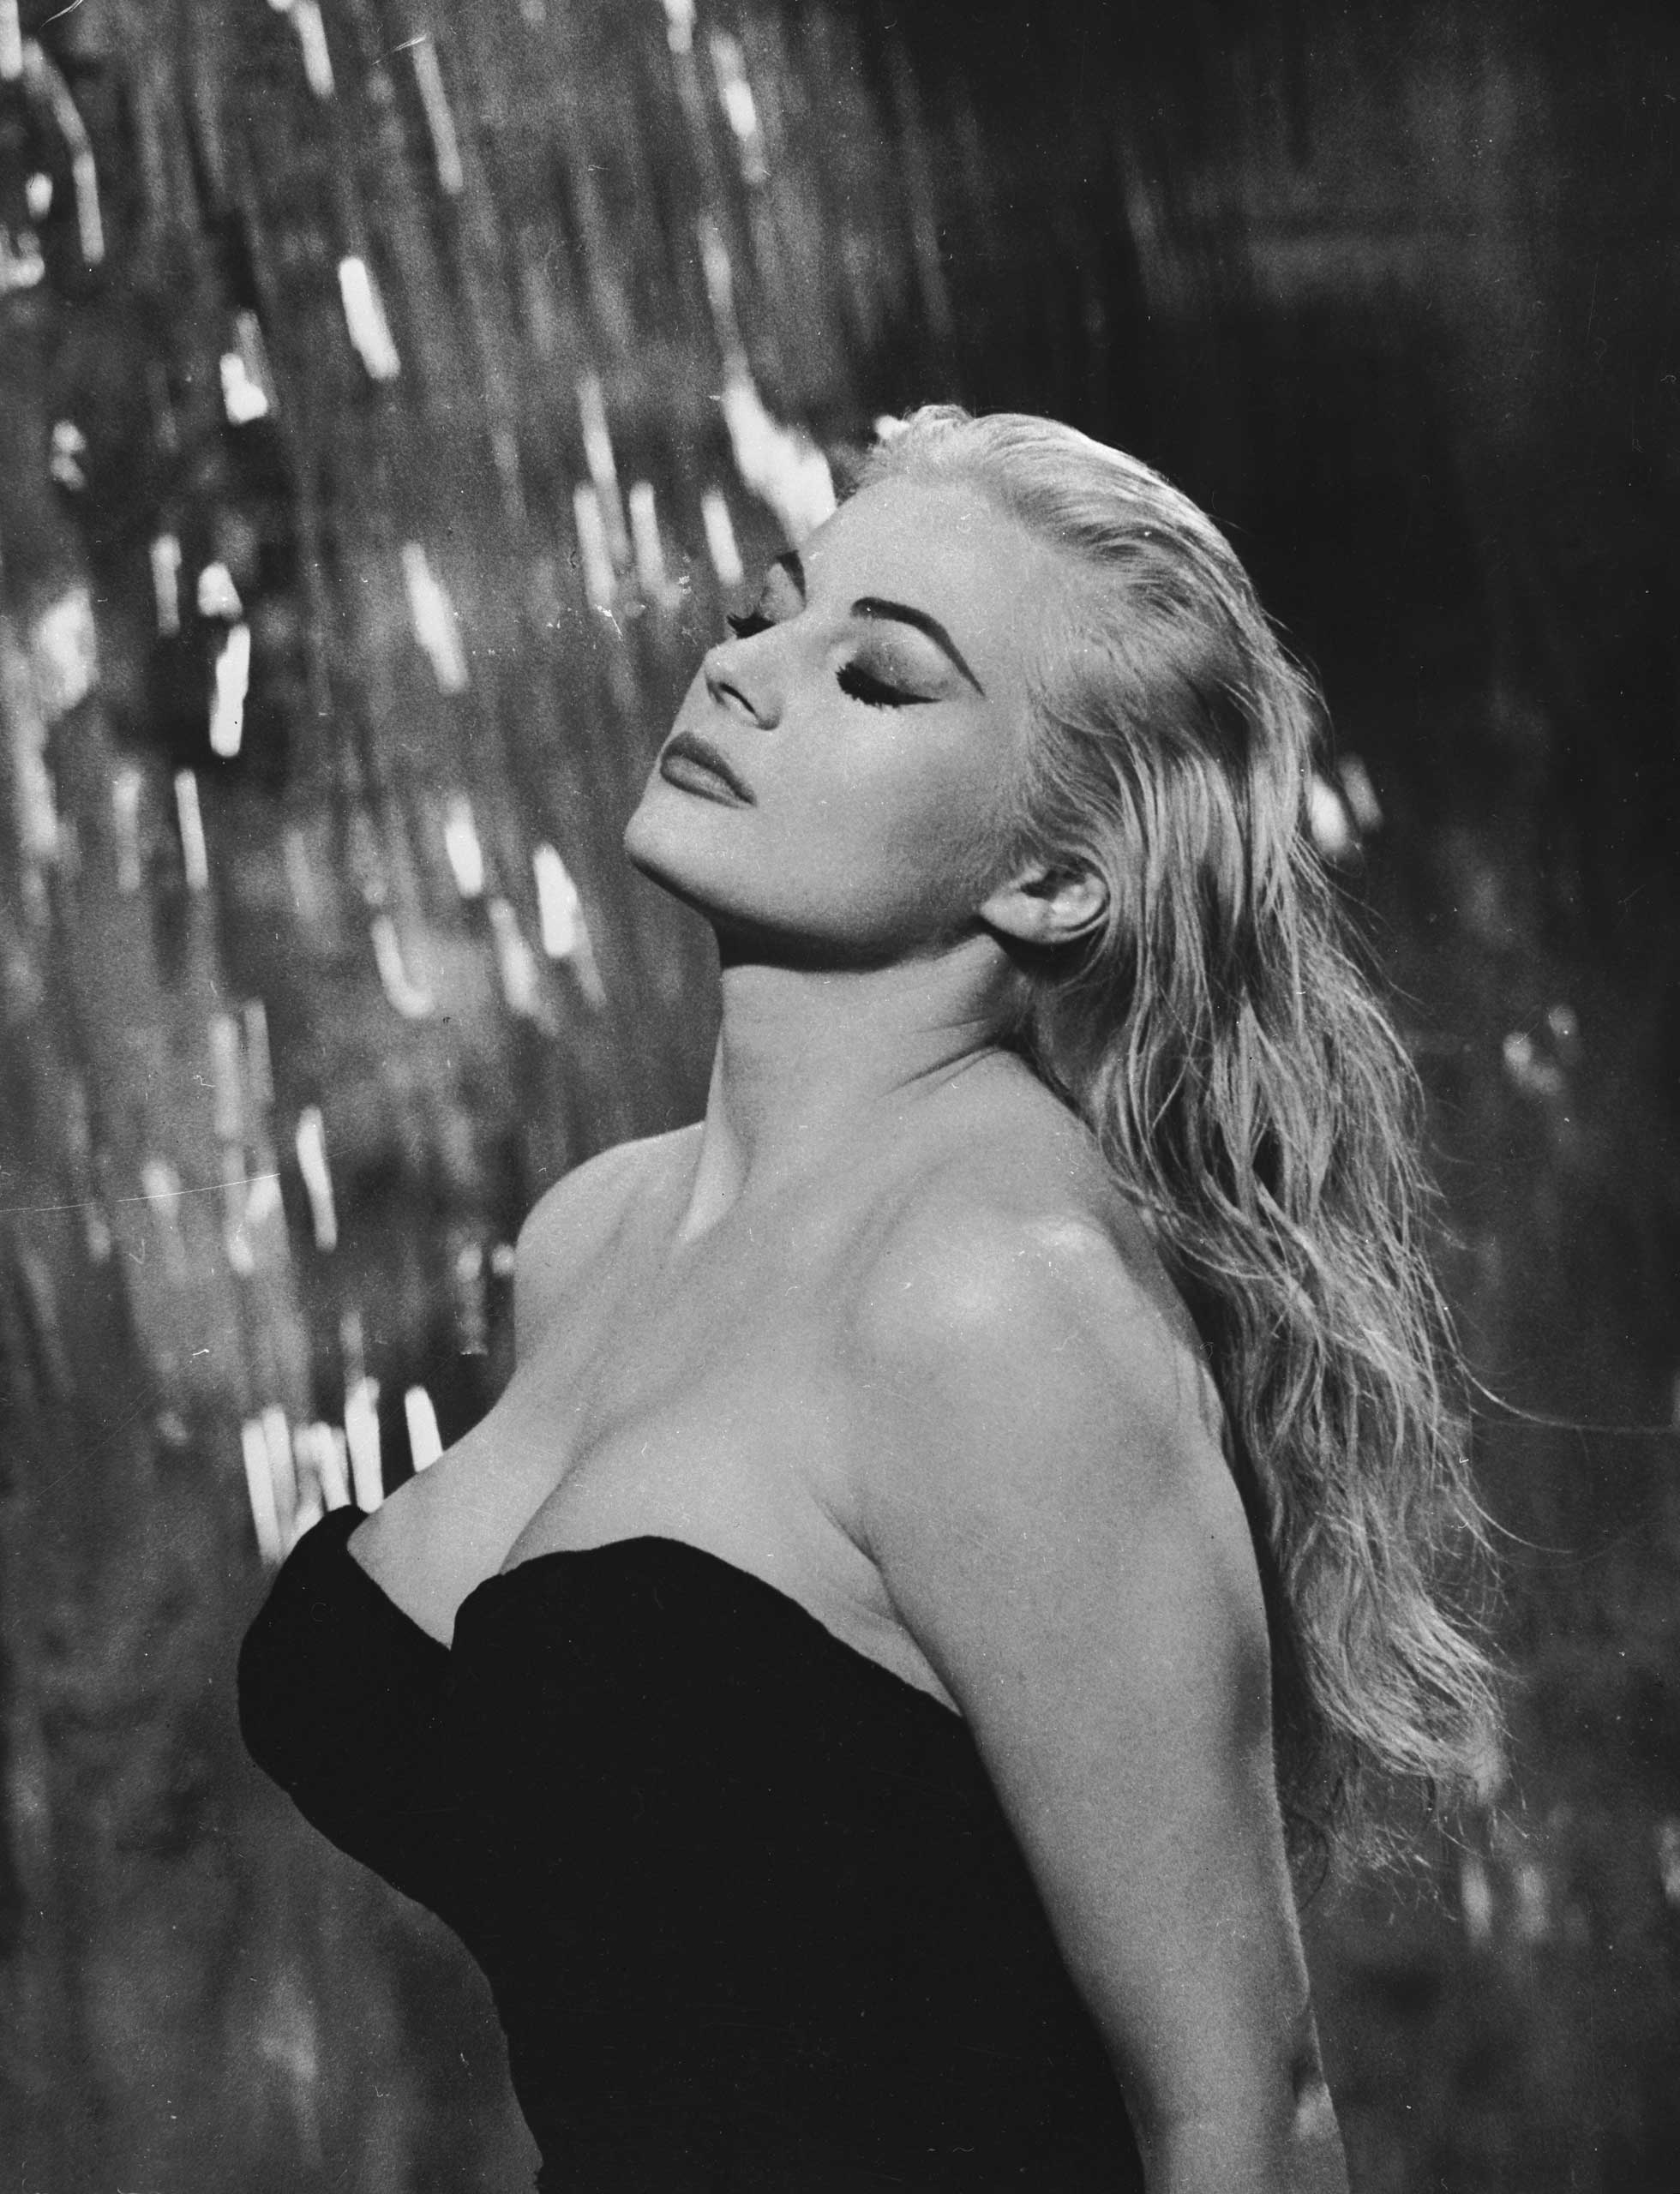 Ekberg as the Marilyn Monroe-like Sylvia, playing in Rome's Trevi fountain in La Dolce Vita in 1960.